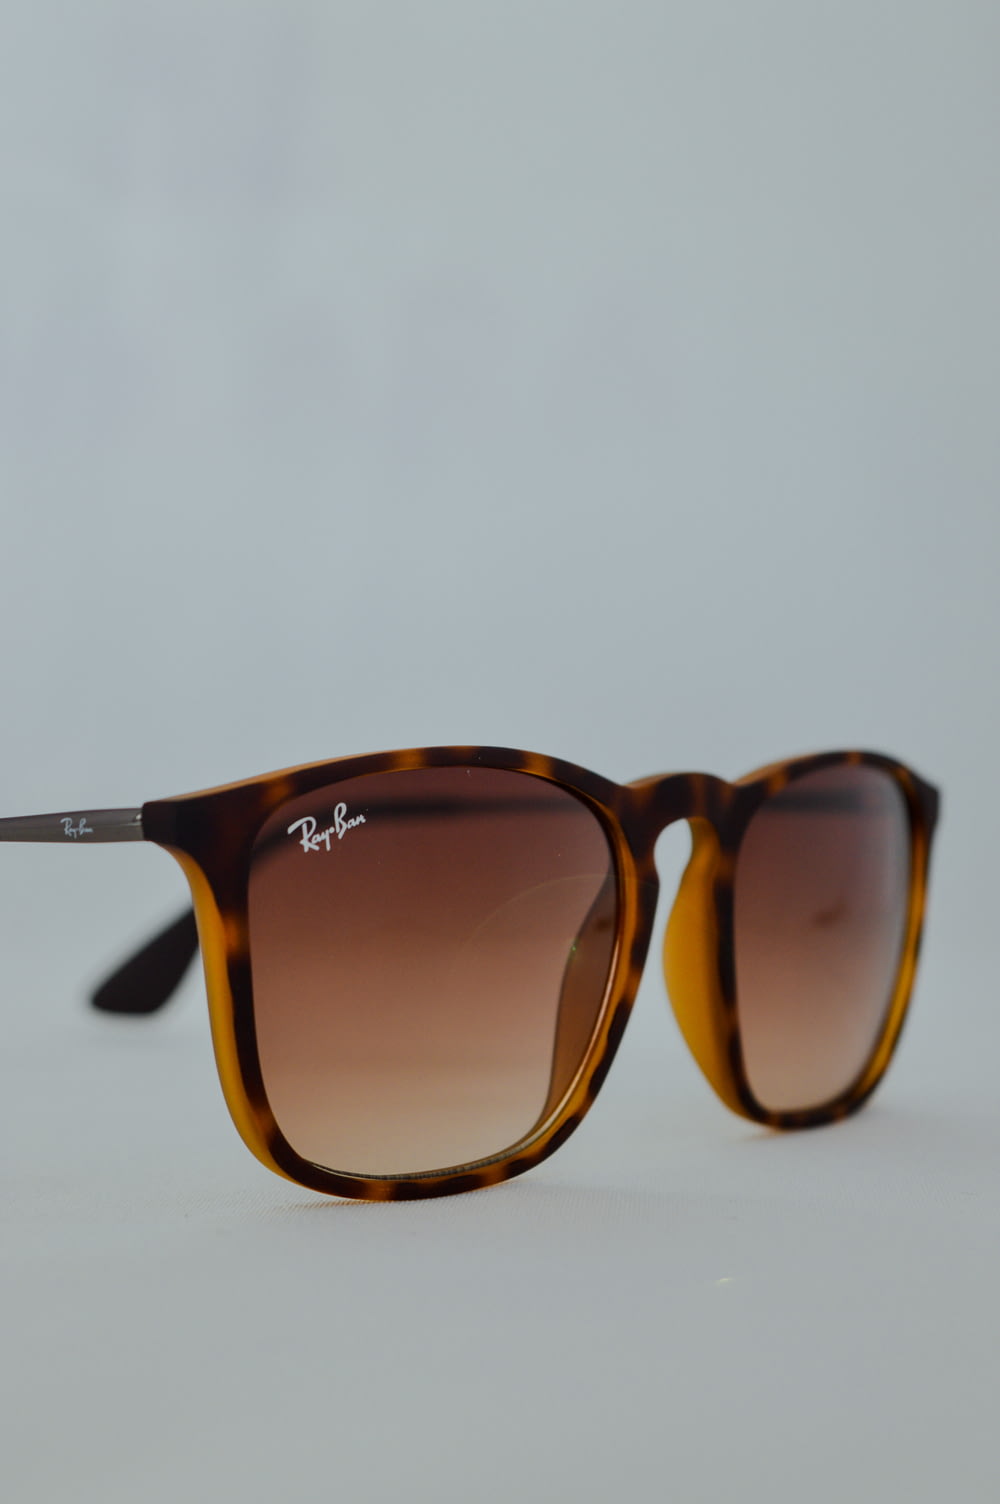 brown framed sunglasses on white surface